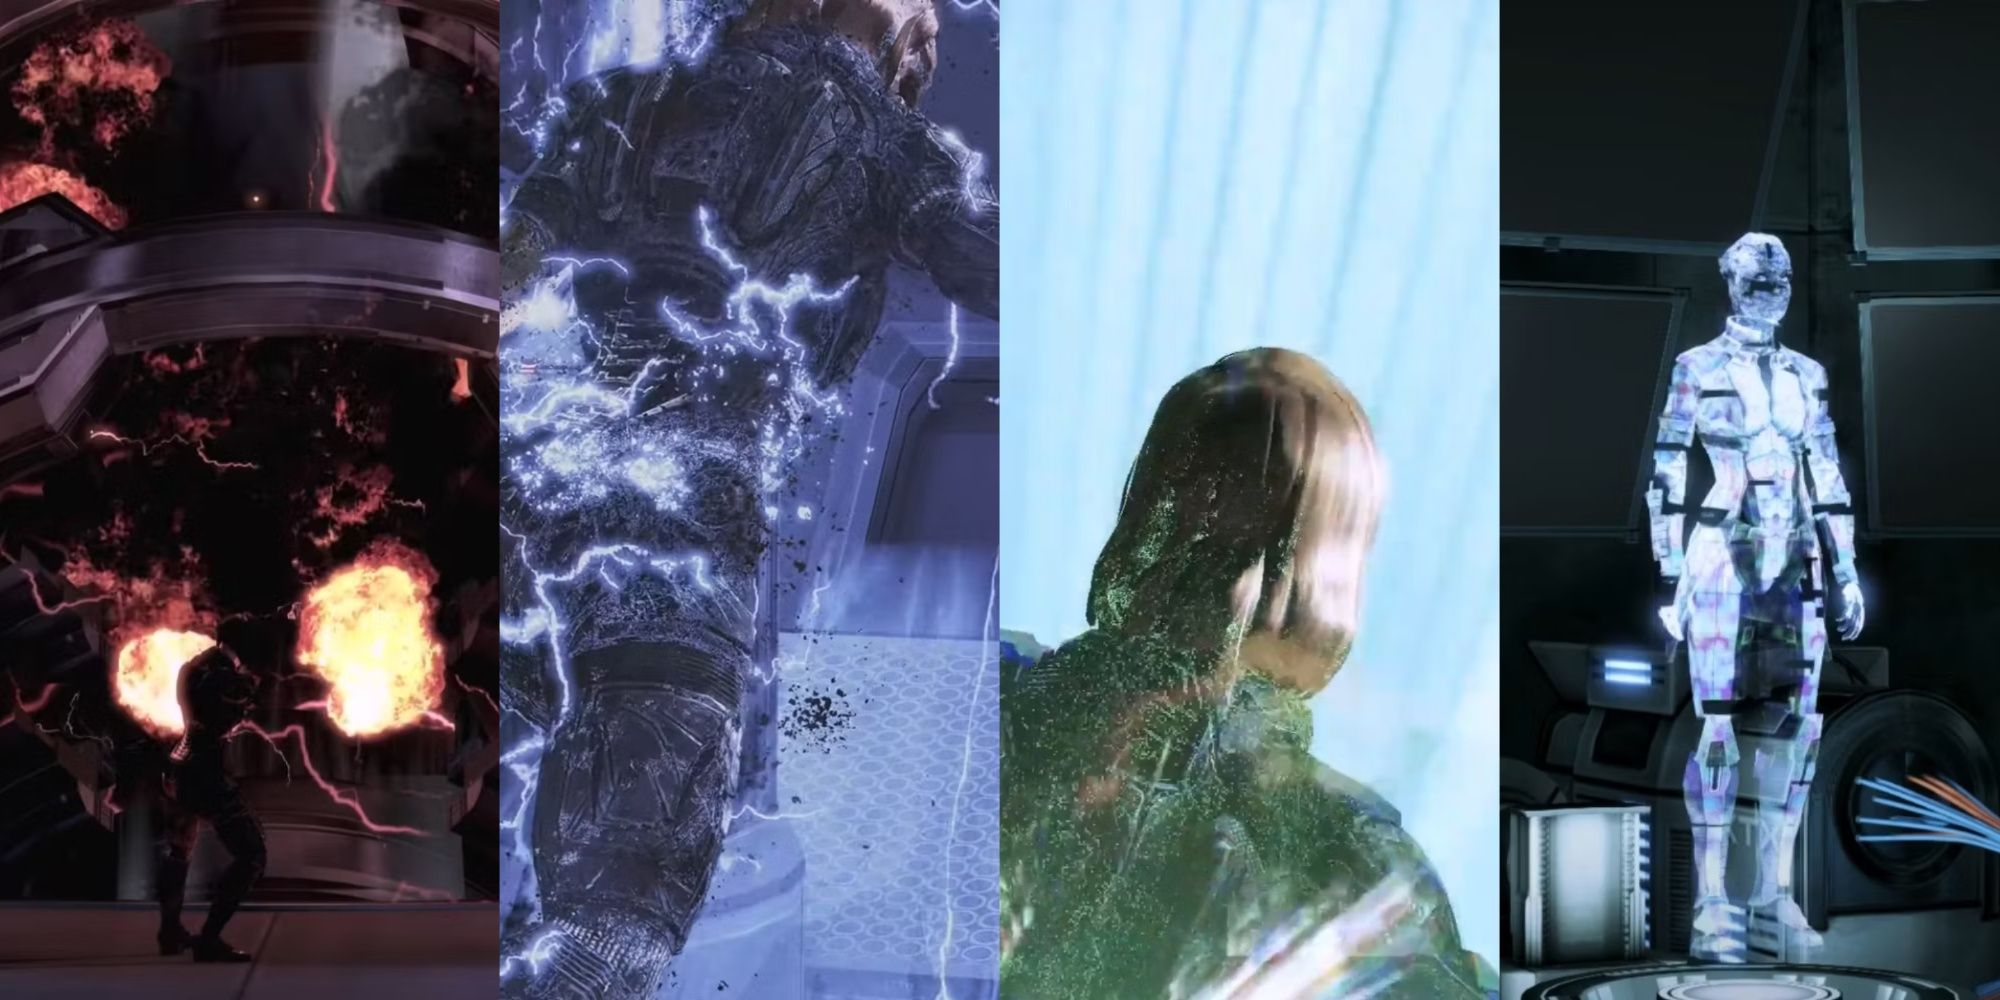 Mass Effect 3 Endings Split Image Of Destroy ending, control ending, Synthesis ending, and refusal ending